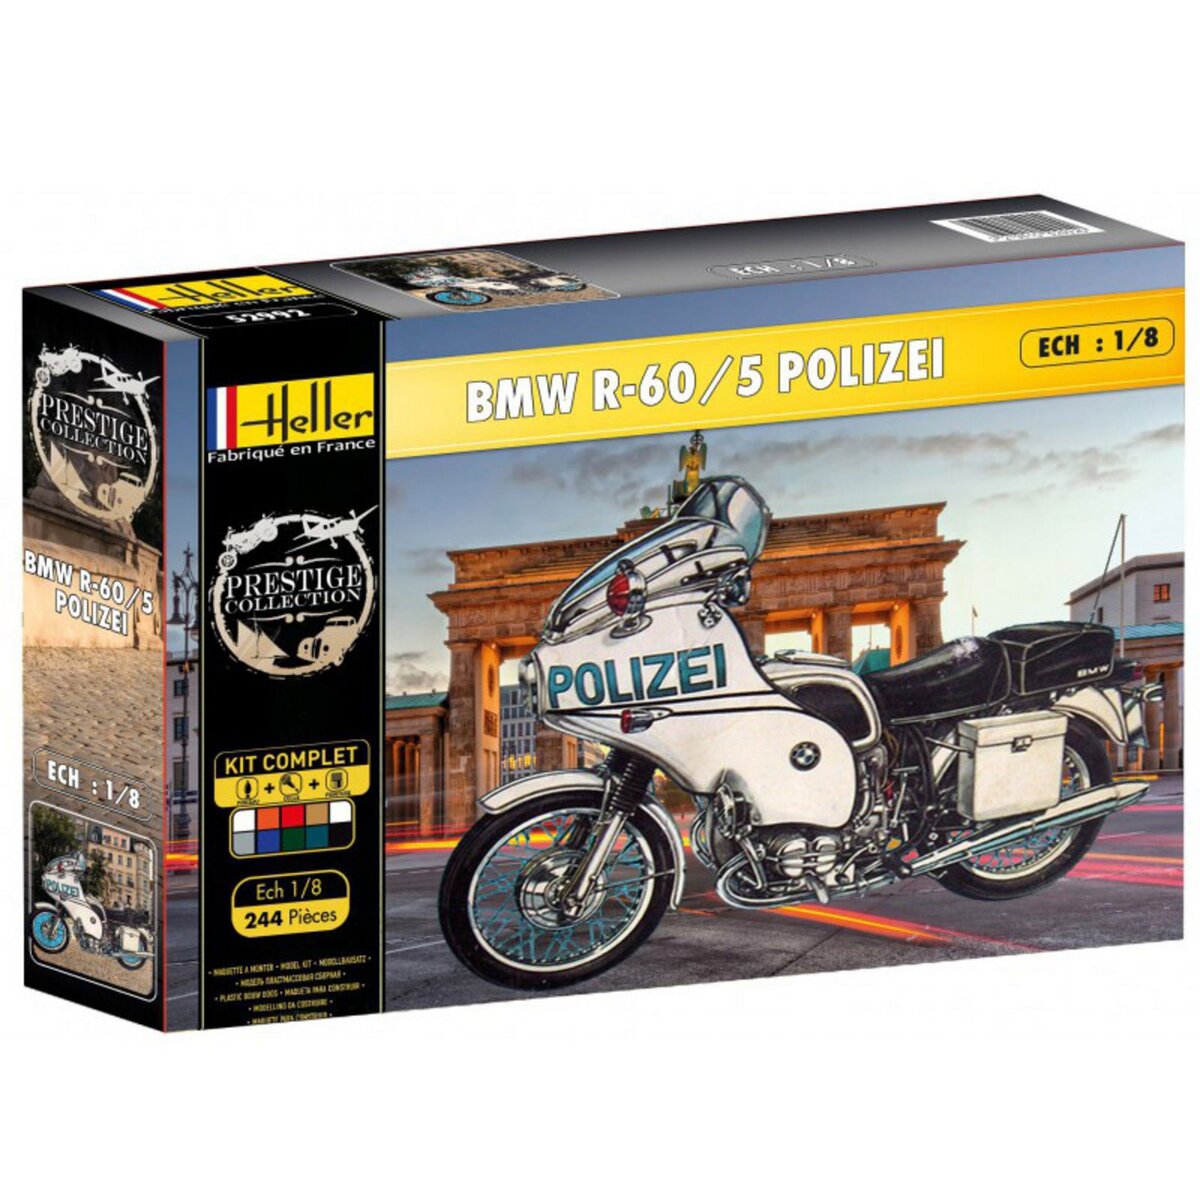 Heller Maquette moto Kit complet : BMW R-60/5 Police pas cher 